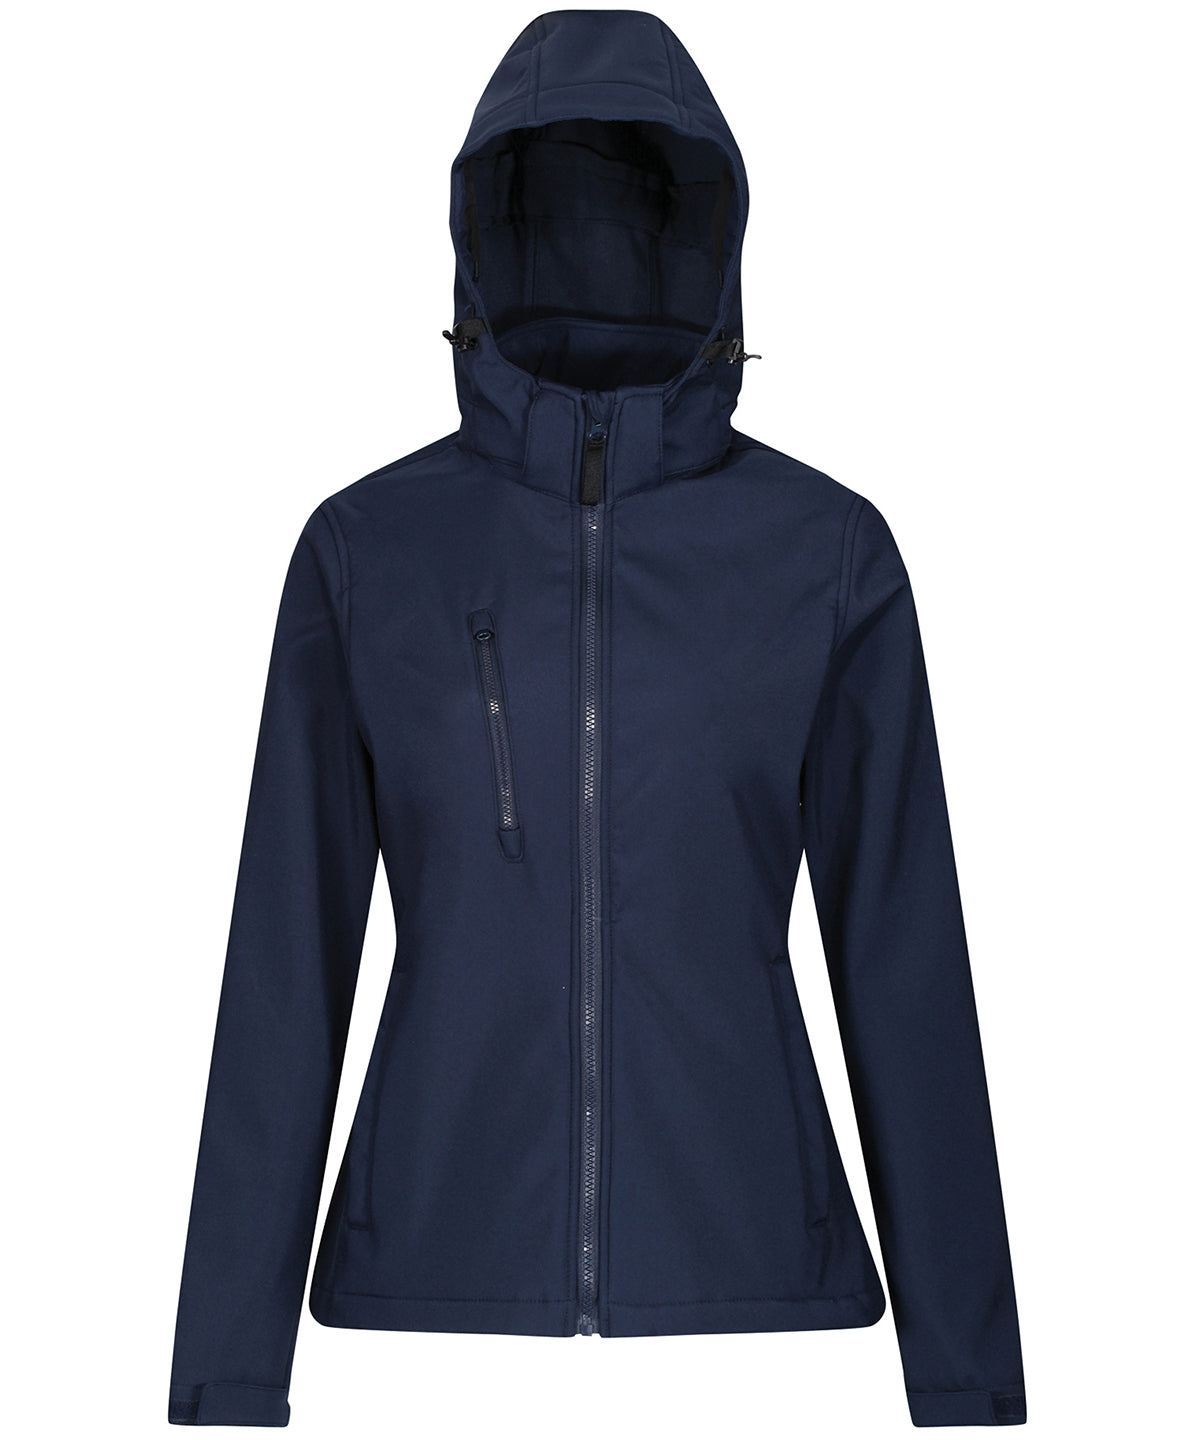 Jakkar - Women's Venturer 3-layer Hooded Softshell Jacket